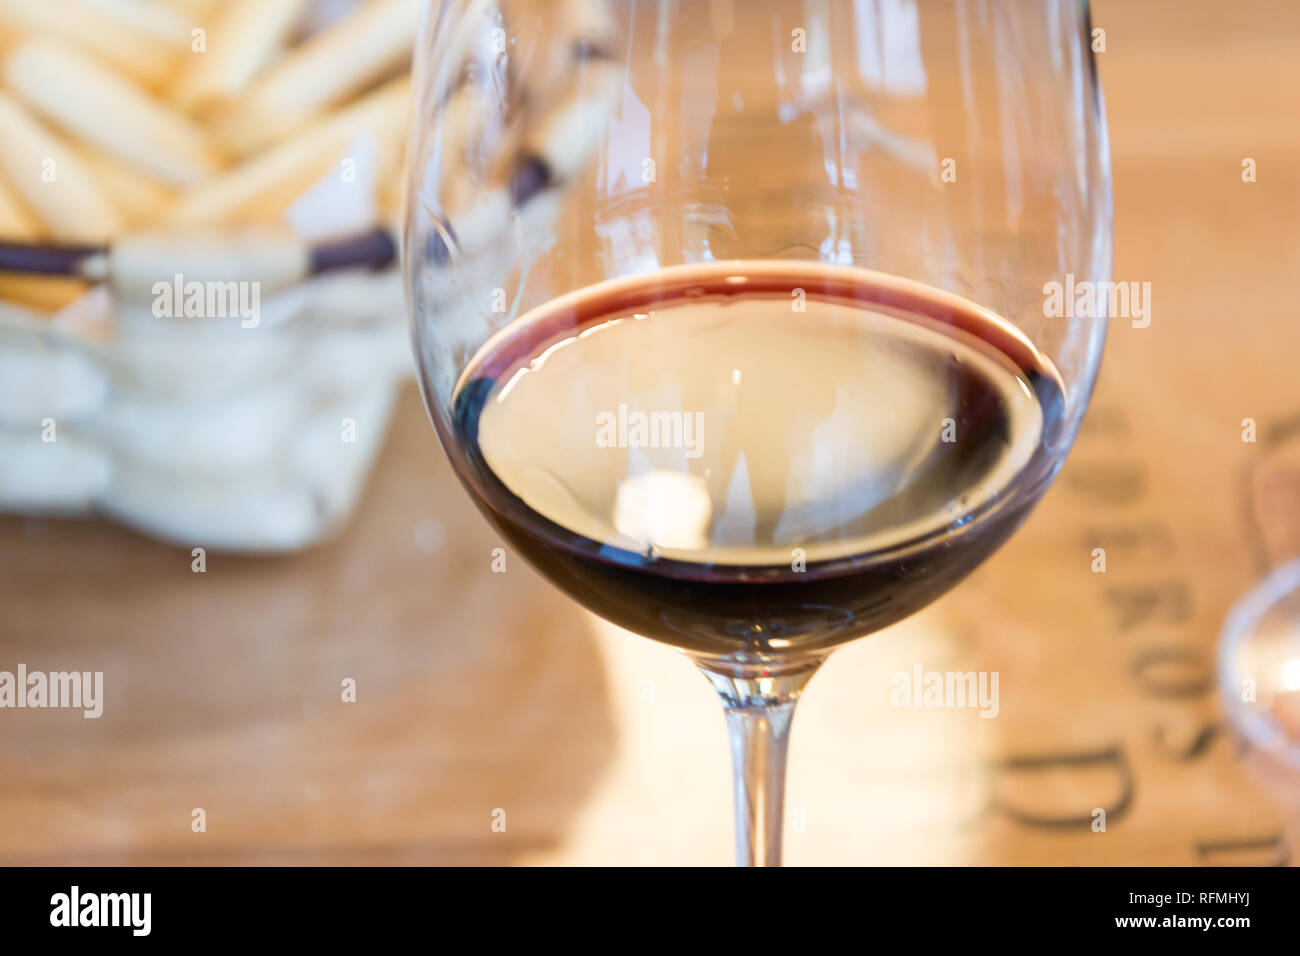 ELCIEGO, SPAIN - NOVEMBER 8, 2015: Wine tasting in Marques de Riscal wine museum Stock Photo